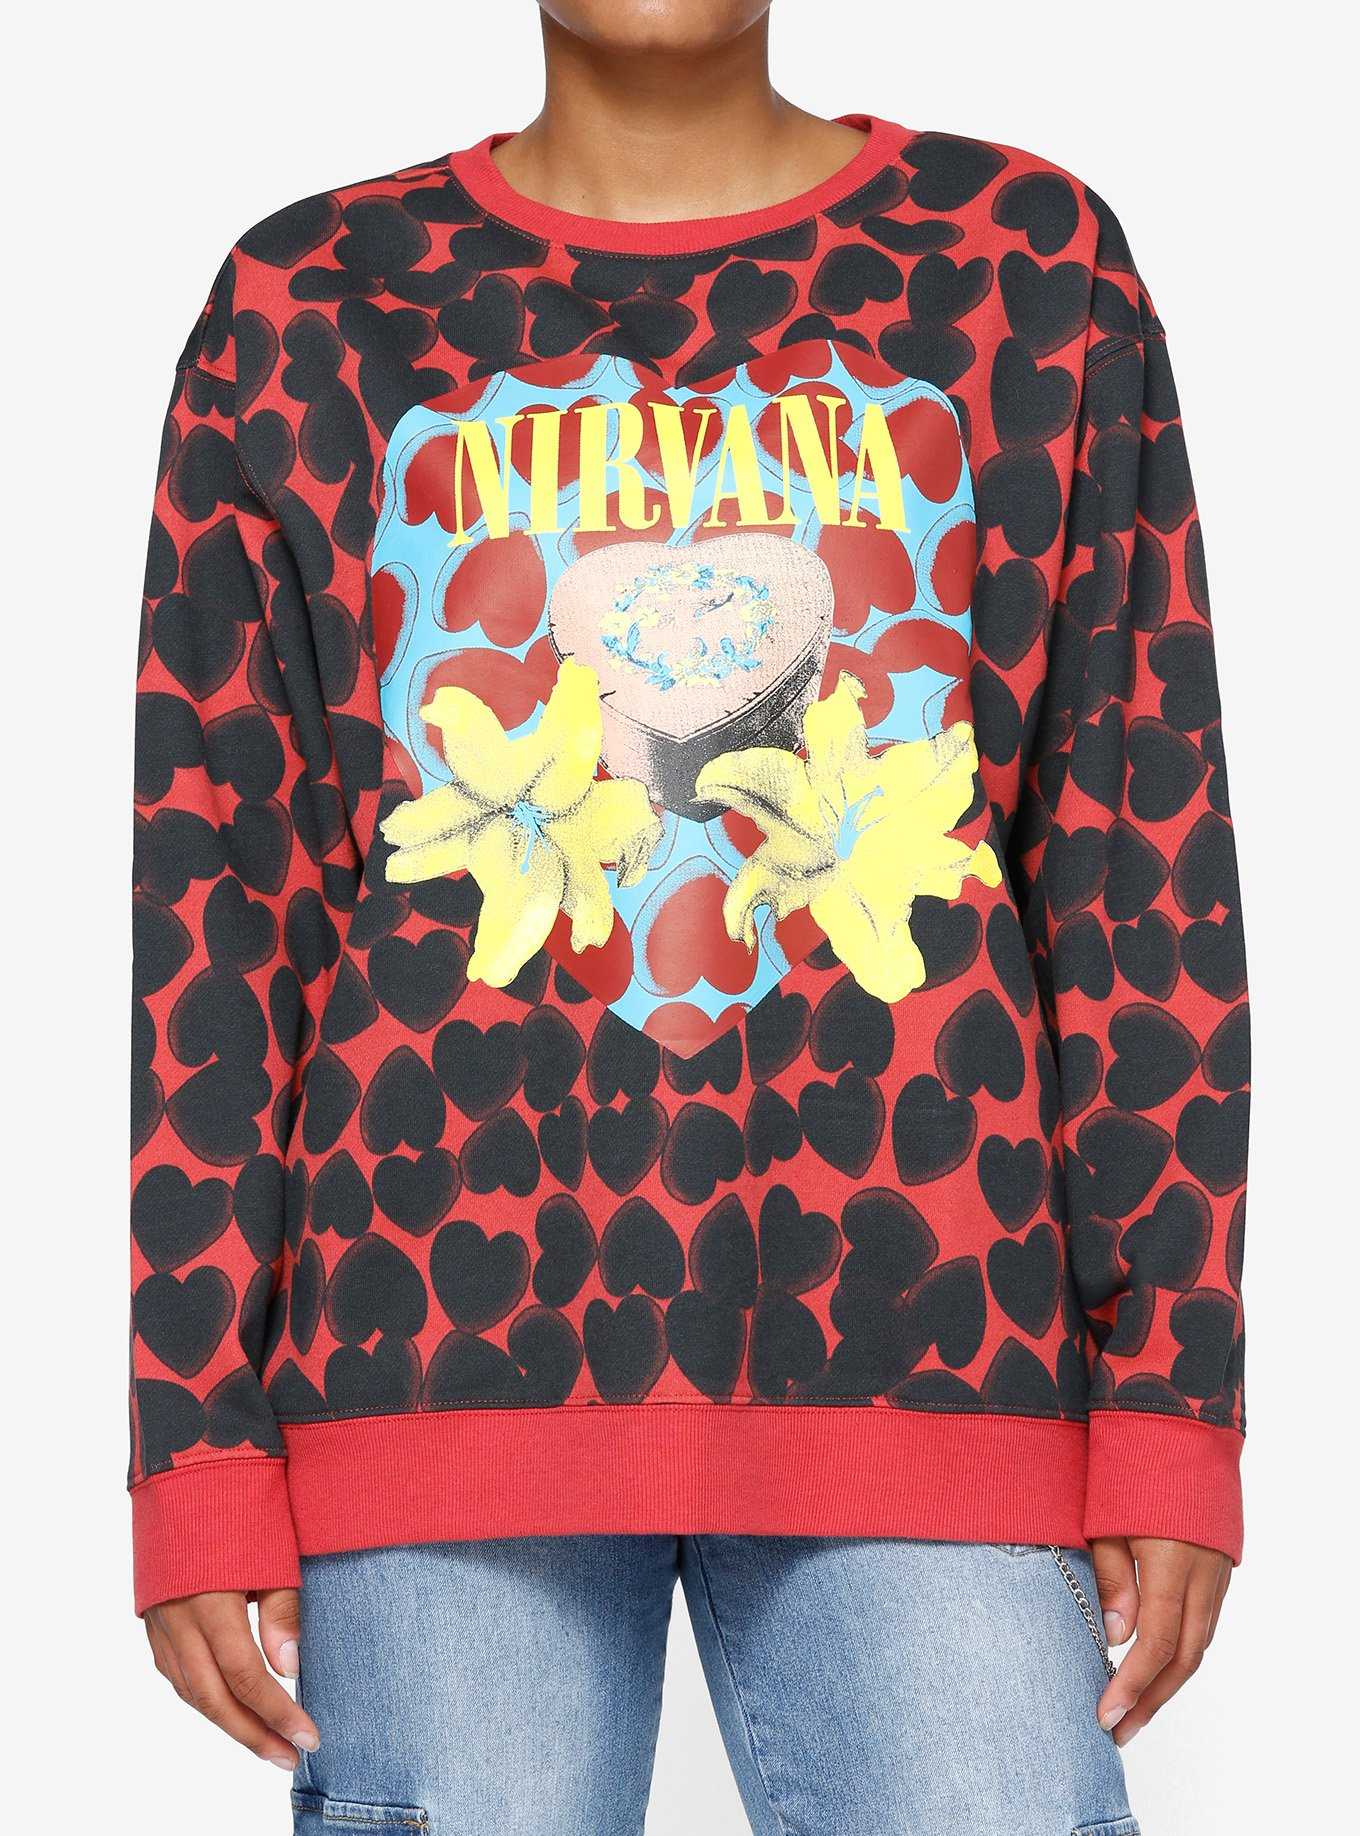 Nirvana Heart-Shaped Box Allover Print Girls Sweatshirt, , hi-res